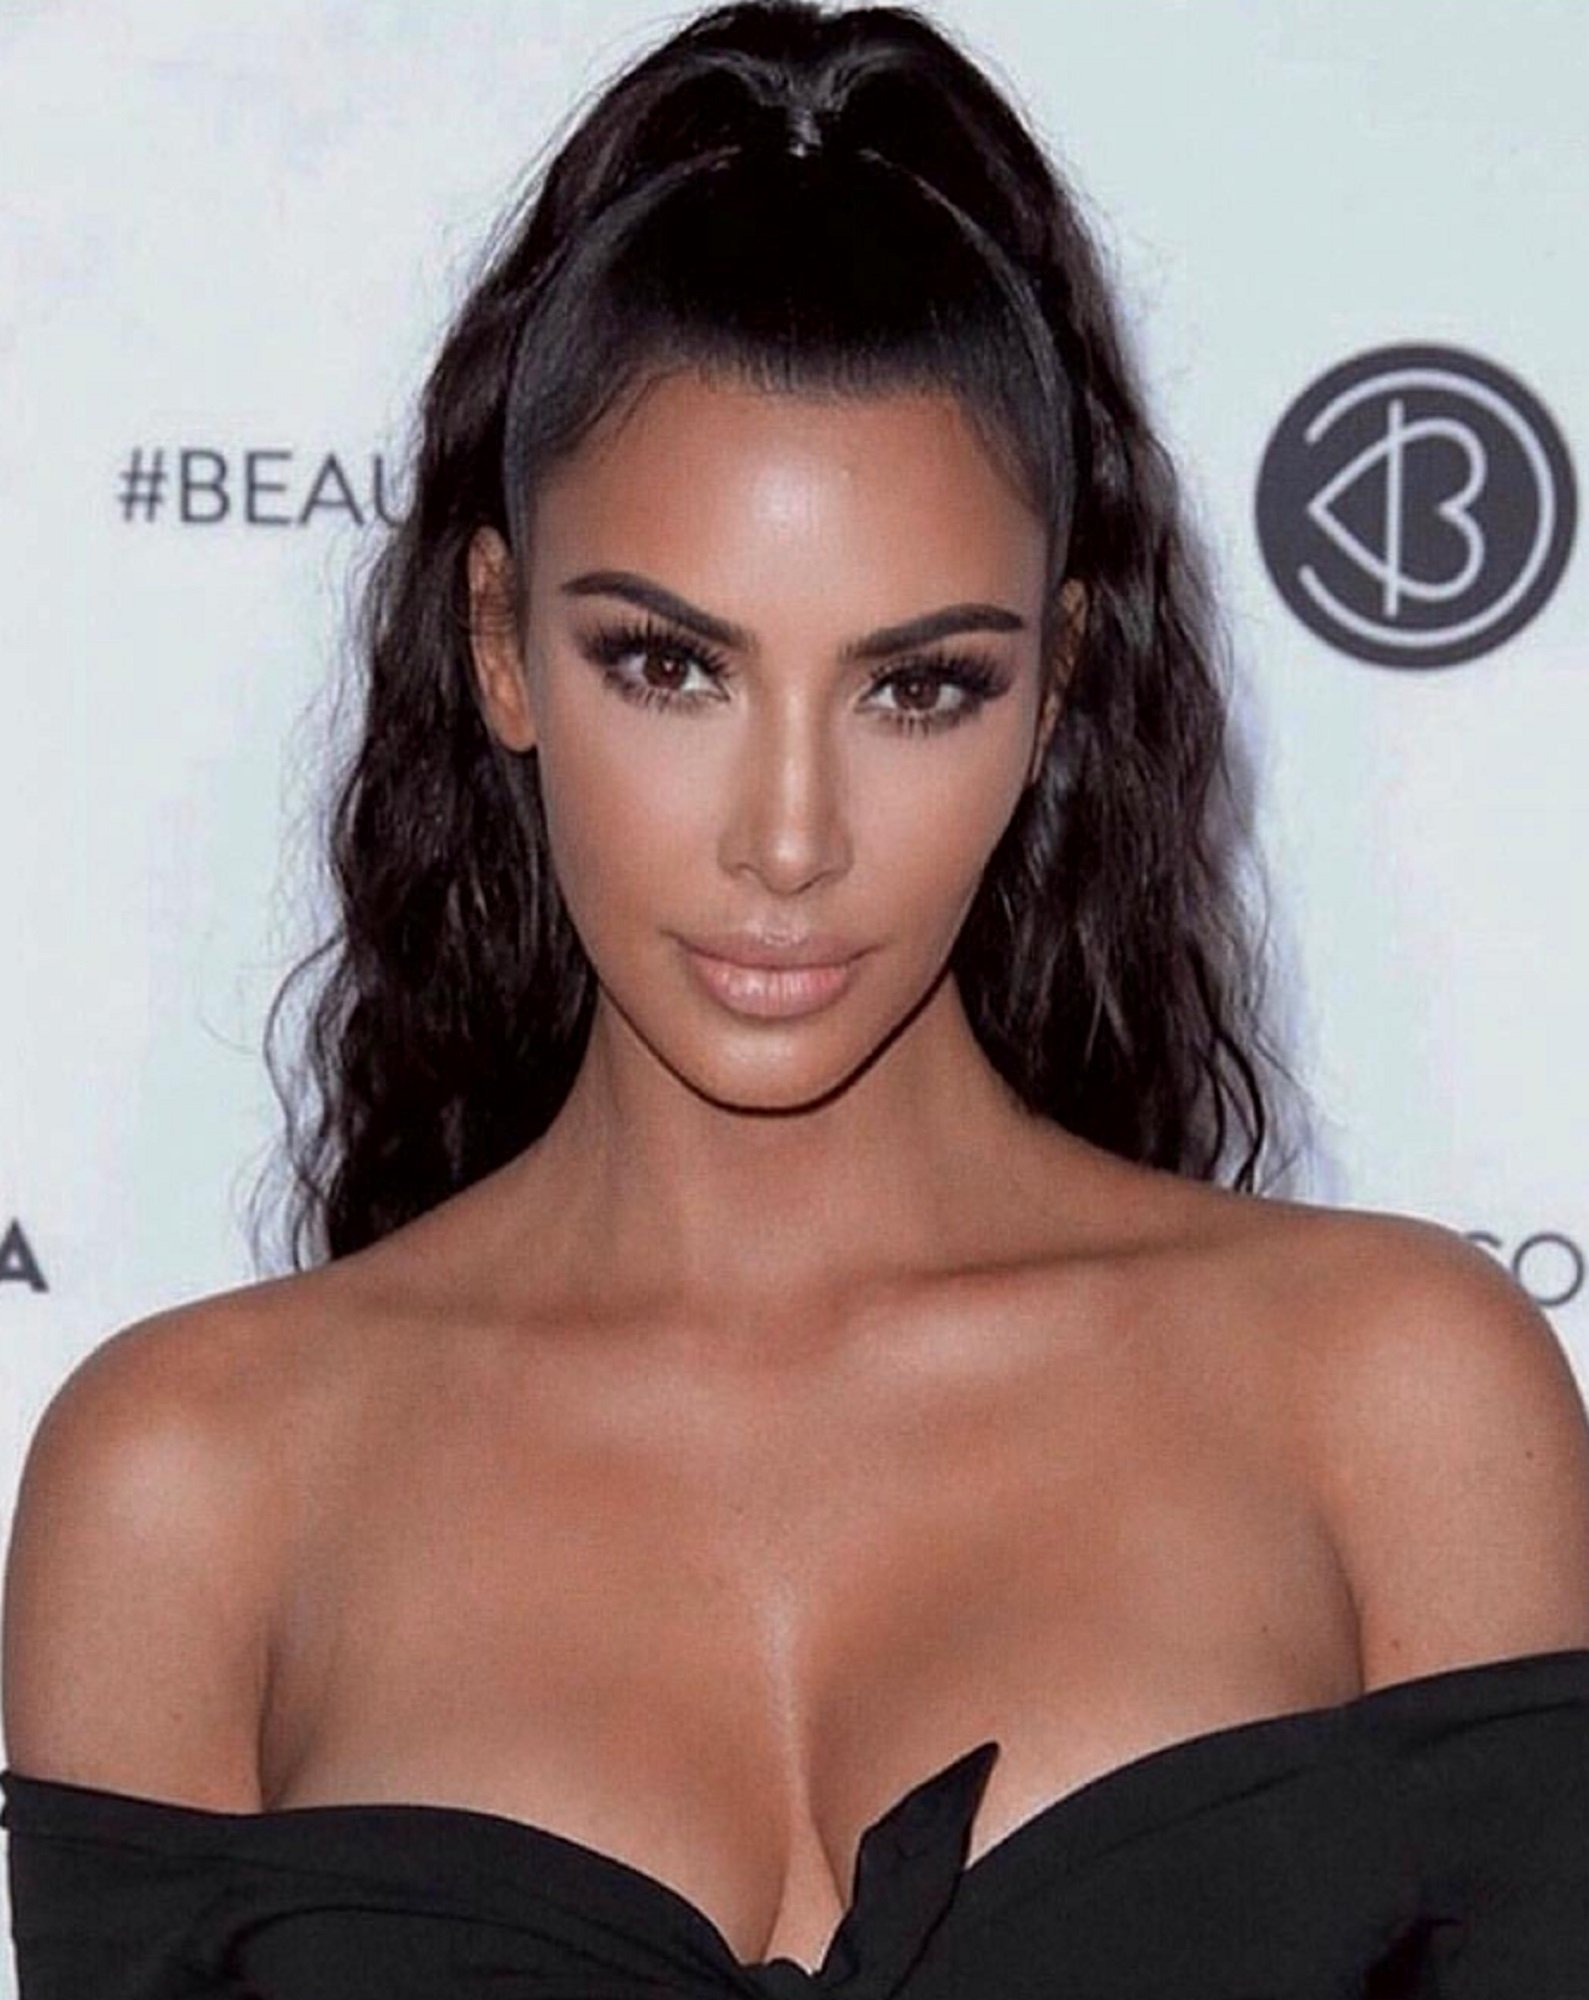 Kim Kardashian edita les seves axil·les amb Photoshop i els seguidors se n'adonen